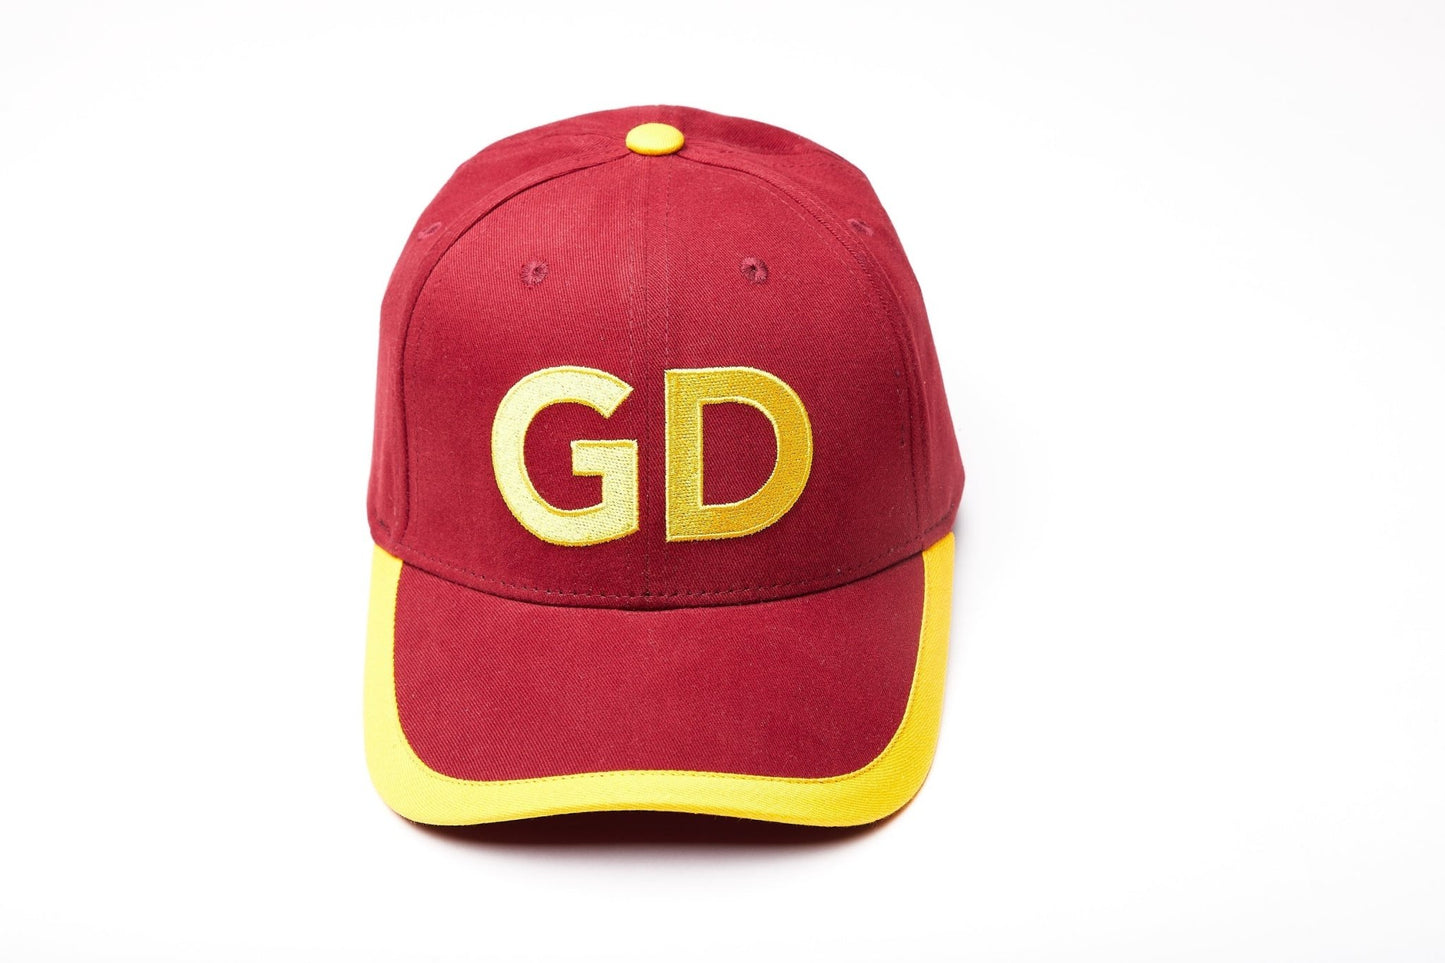 Go Devil Printed Red & Yellow Cap - Go Devil